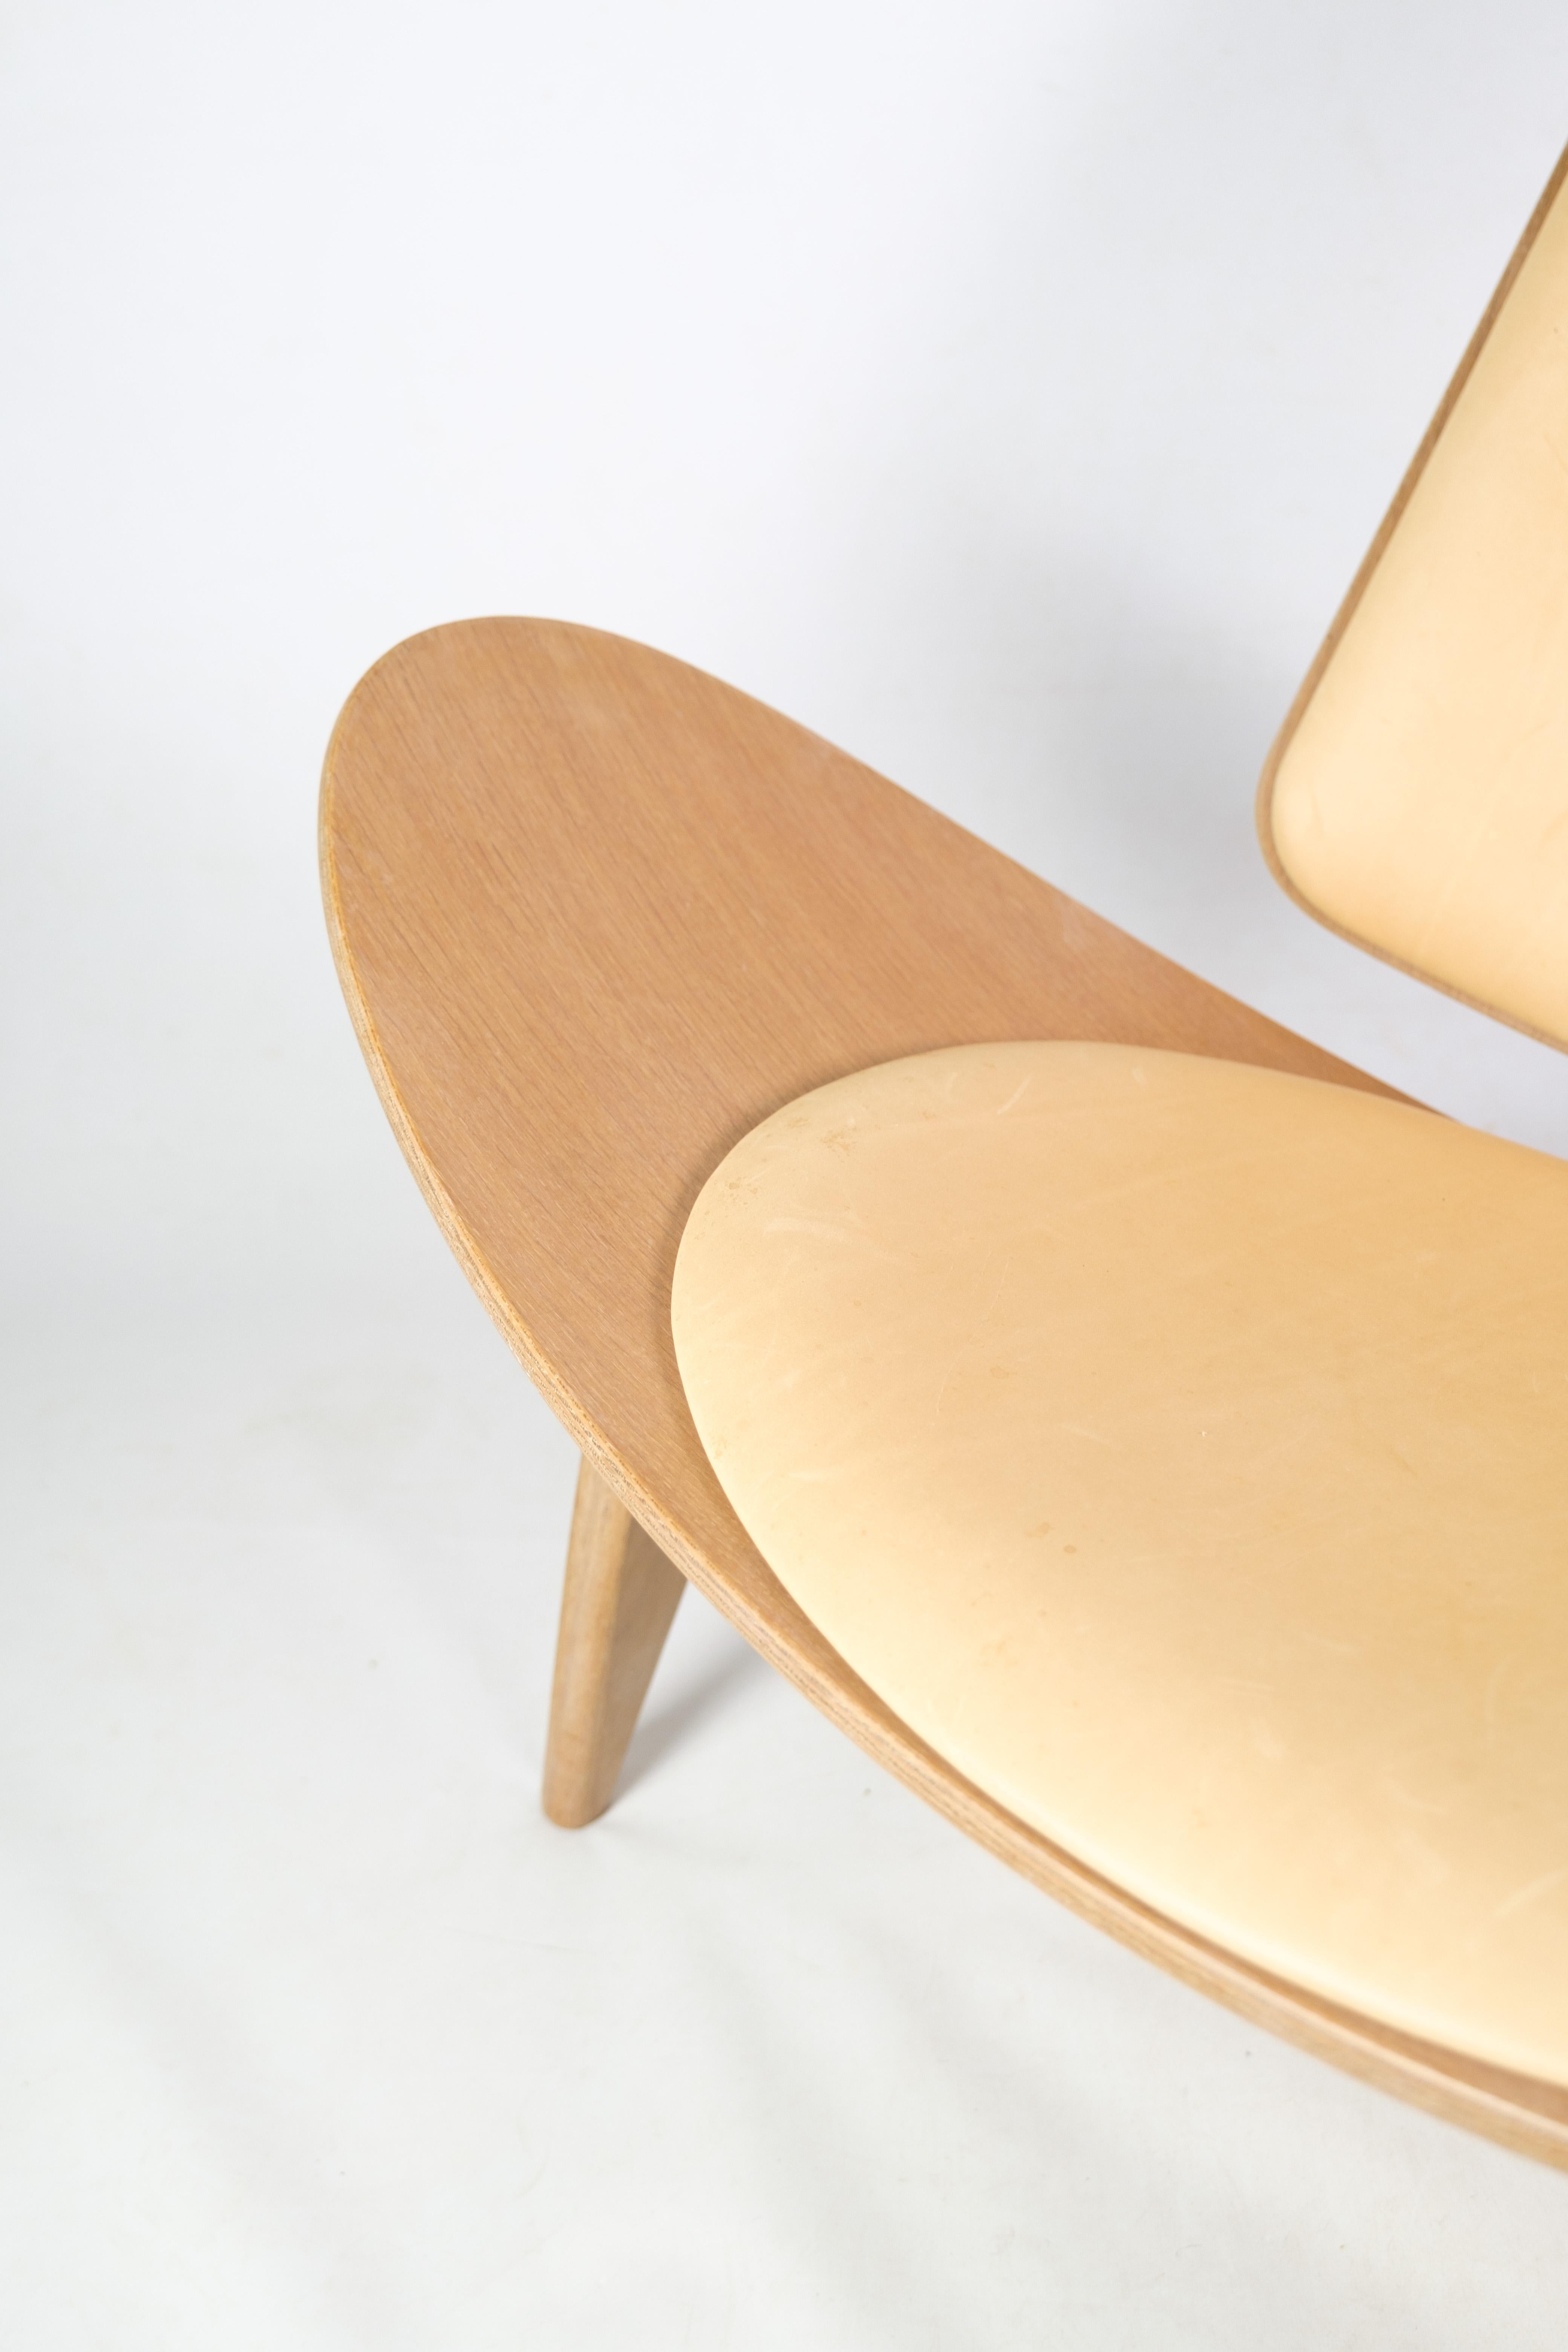 Mid-Century Modern he shell chair model CH07, designed by Hans J. Wegner, made of oak from 2007